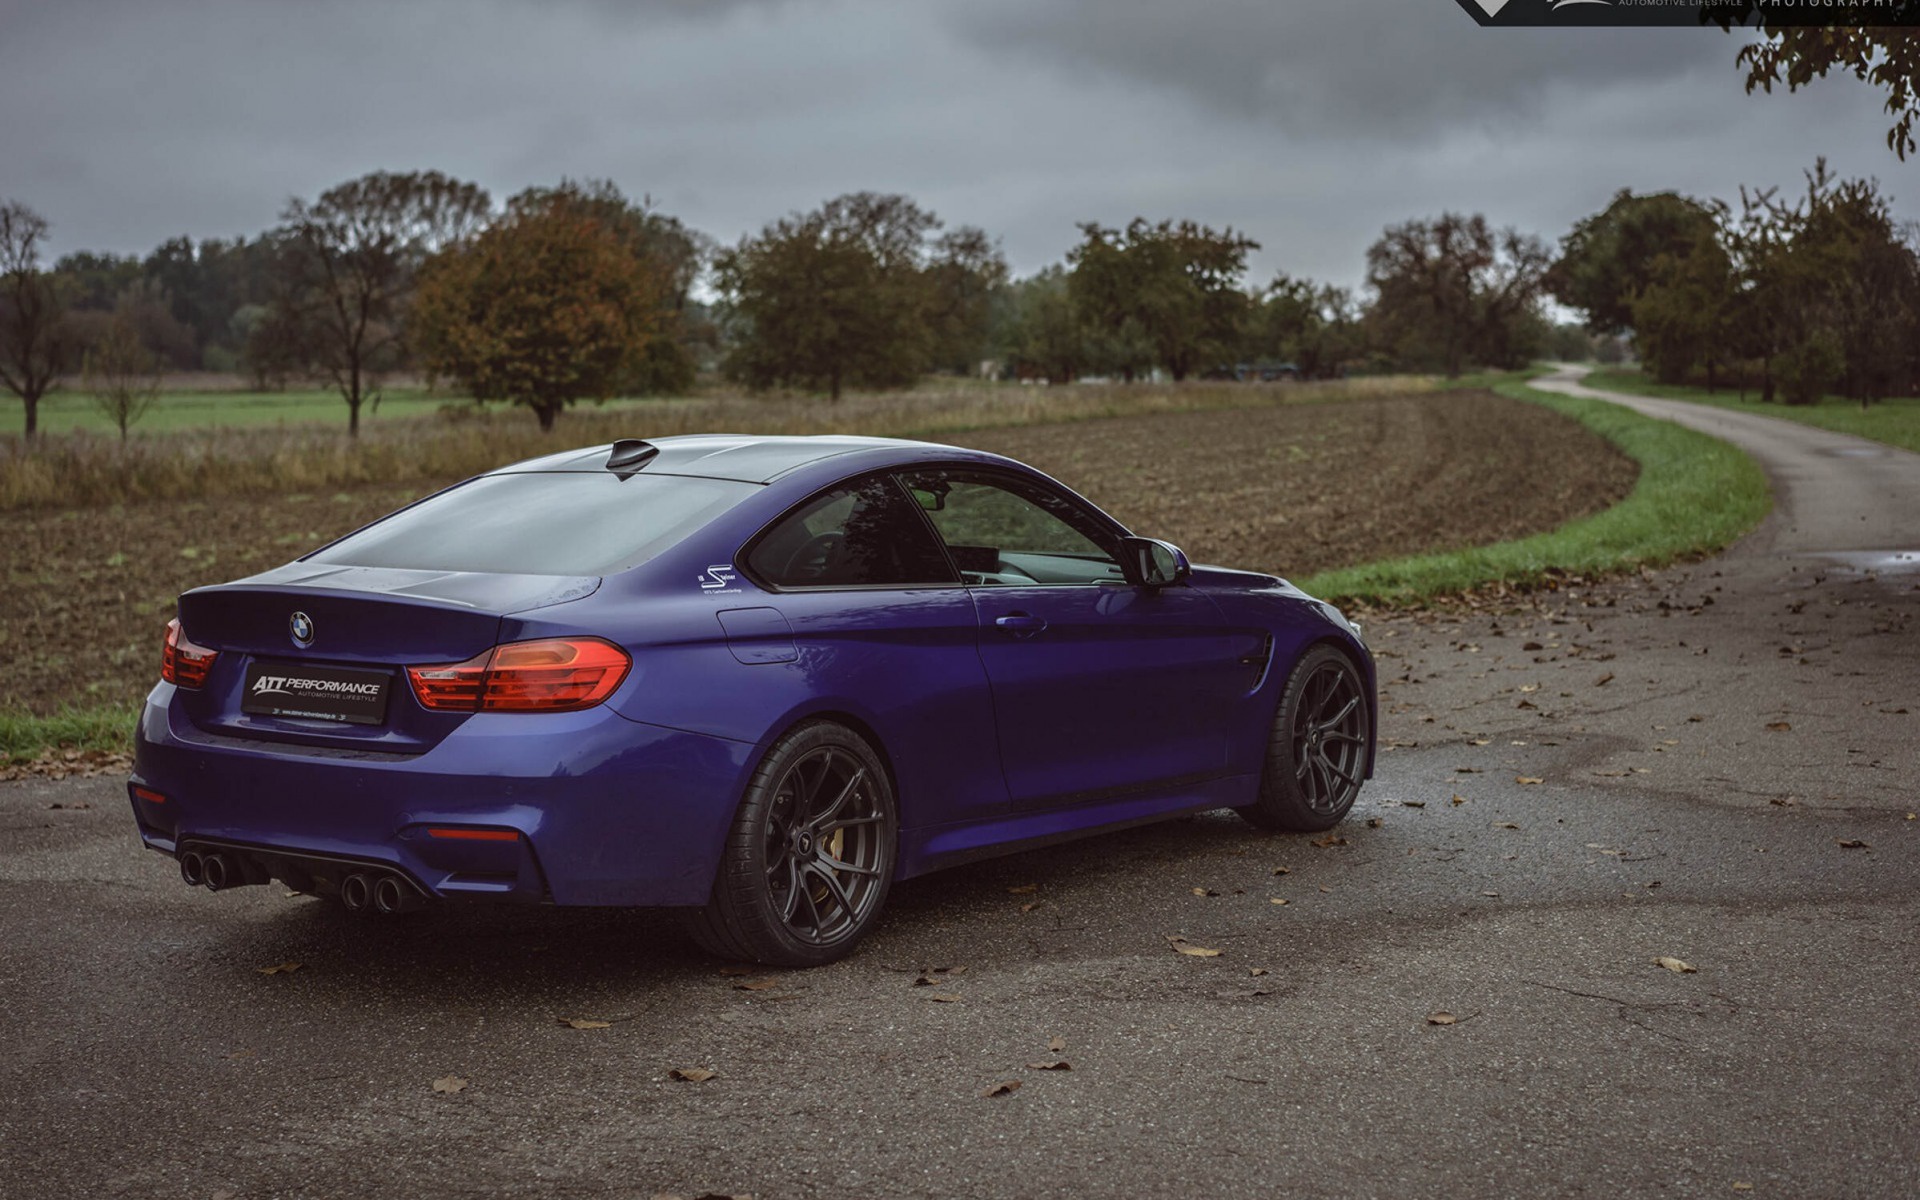 BMW m4 f82 Purple. BMW m4 f82 фиолетовая. BMW m4 f82 Стайлинг. BMW m3 f82 фиолетовая. Tune f